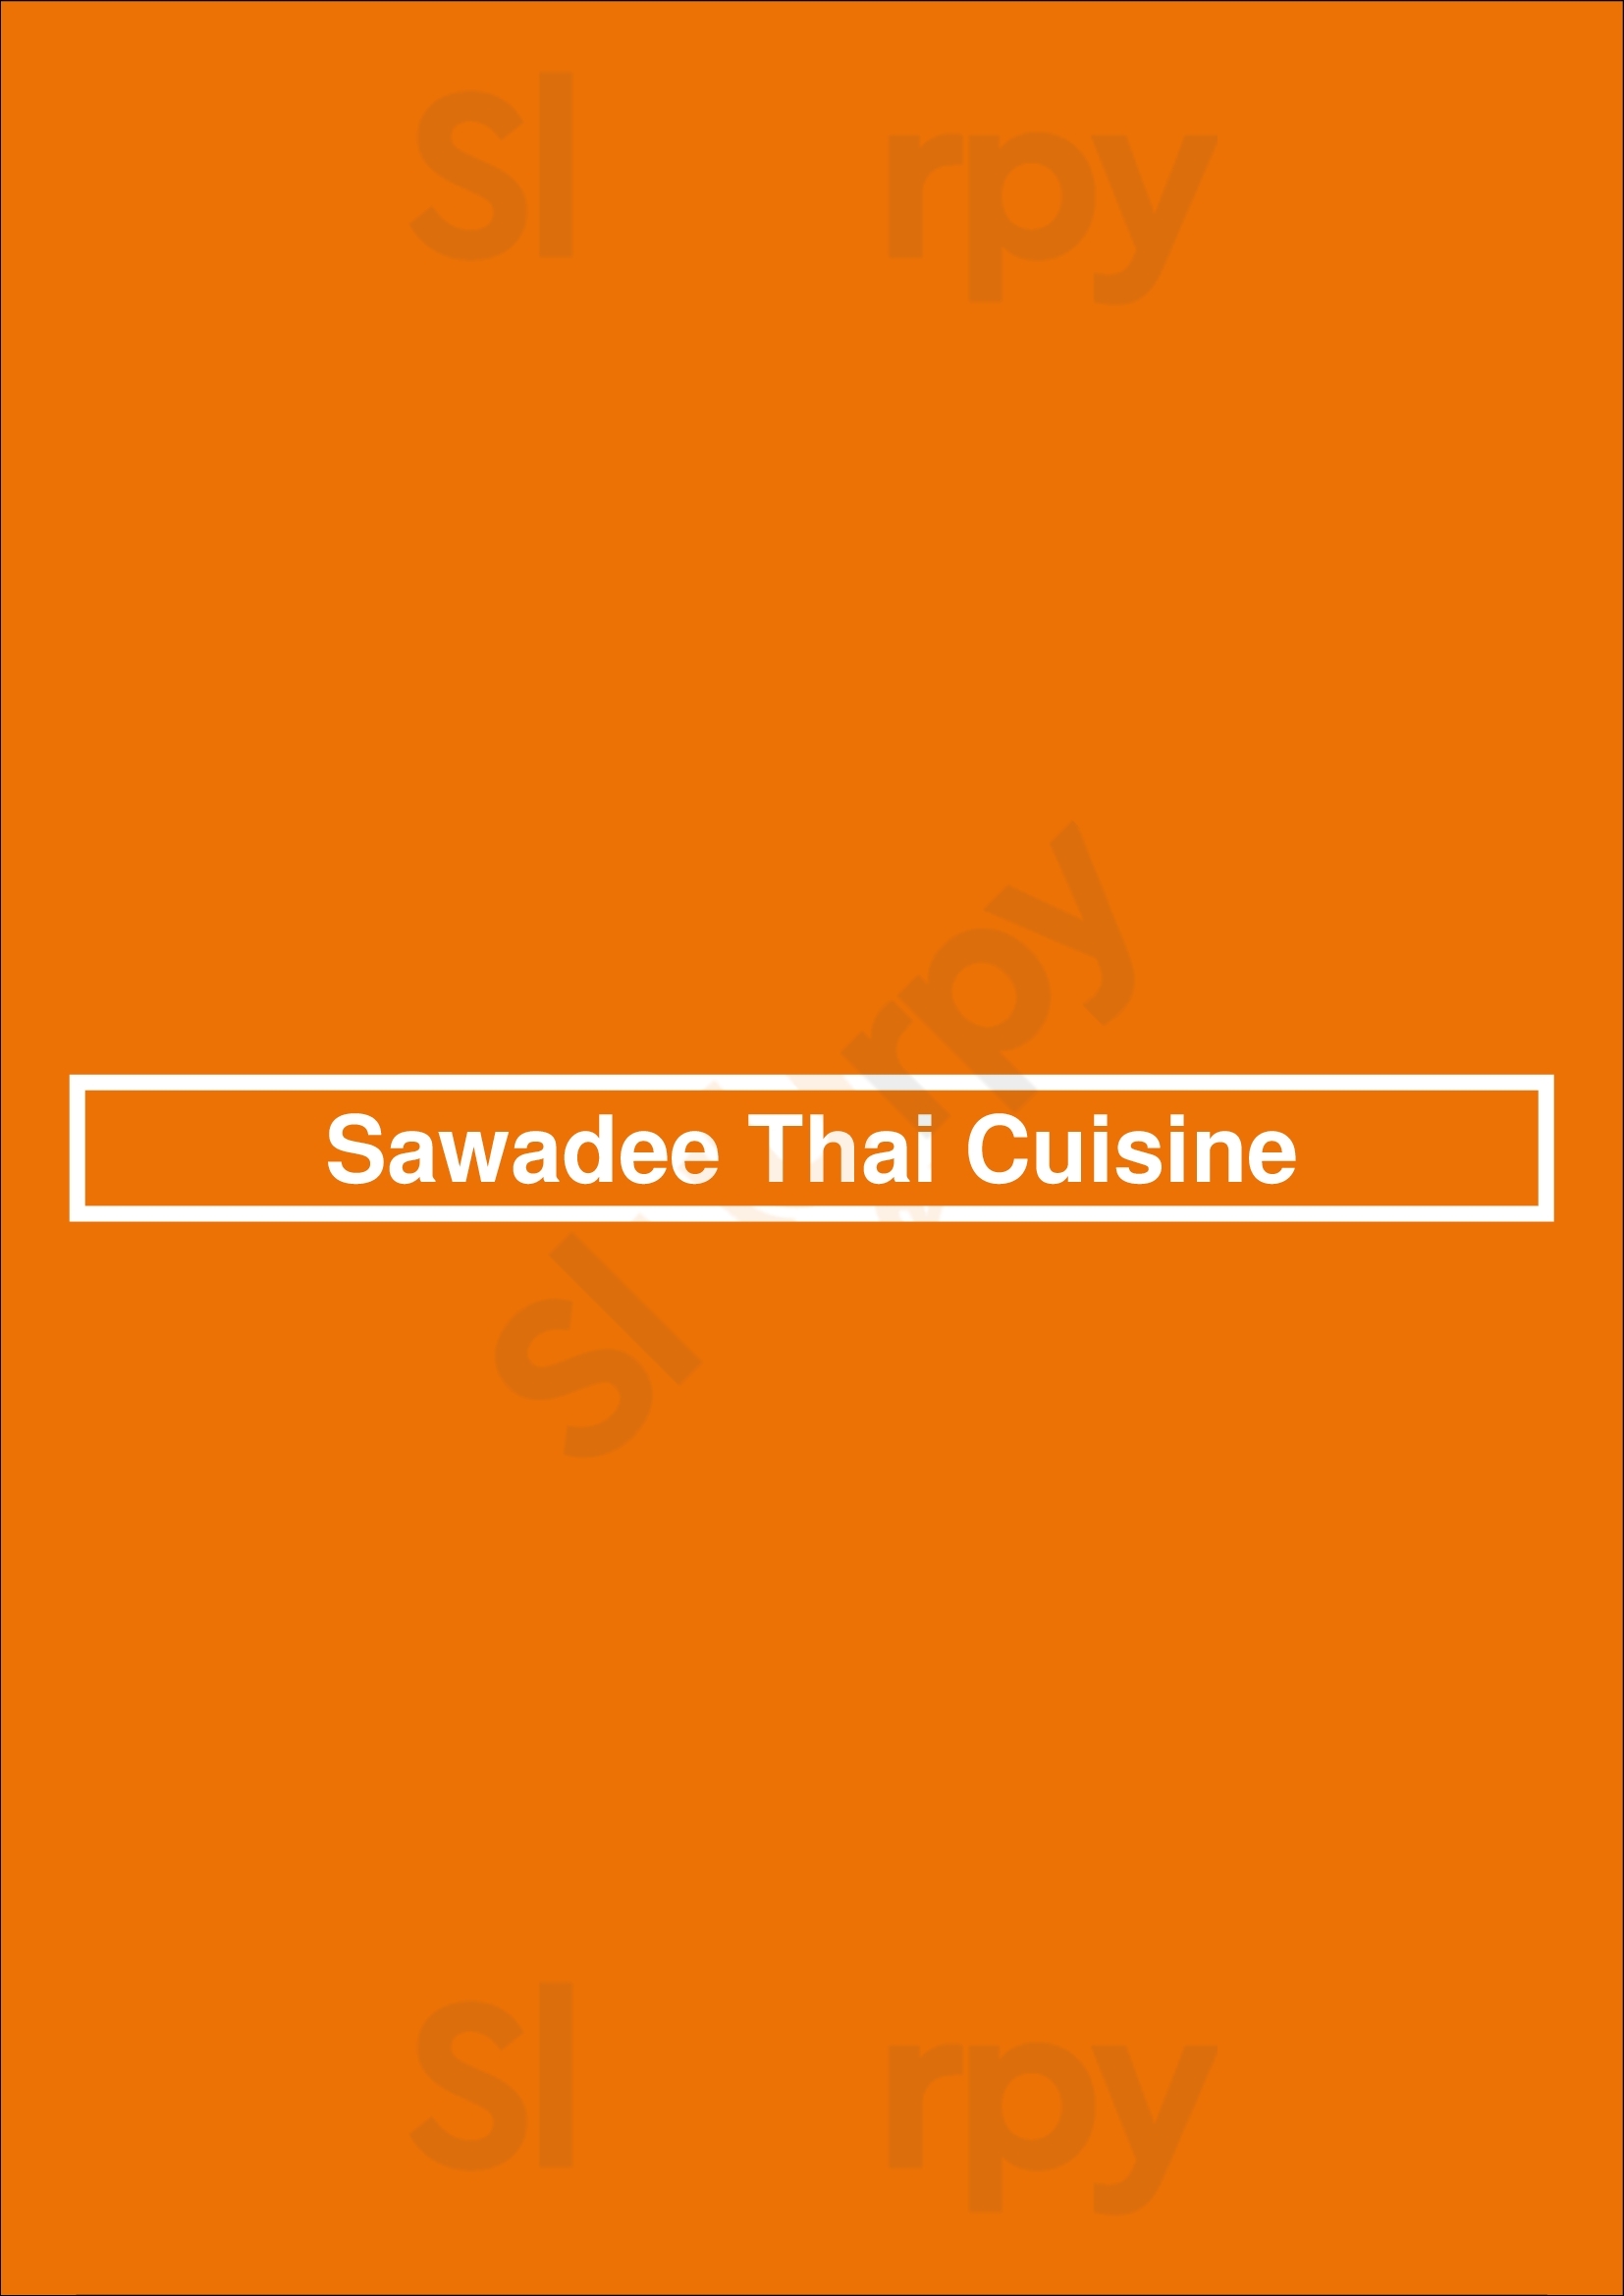 Sawadee Thai Cuisine South Windsor Menu - 1